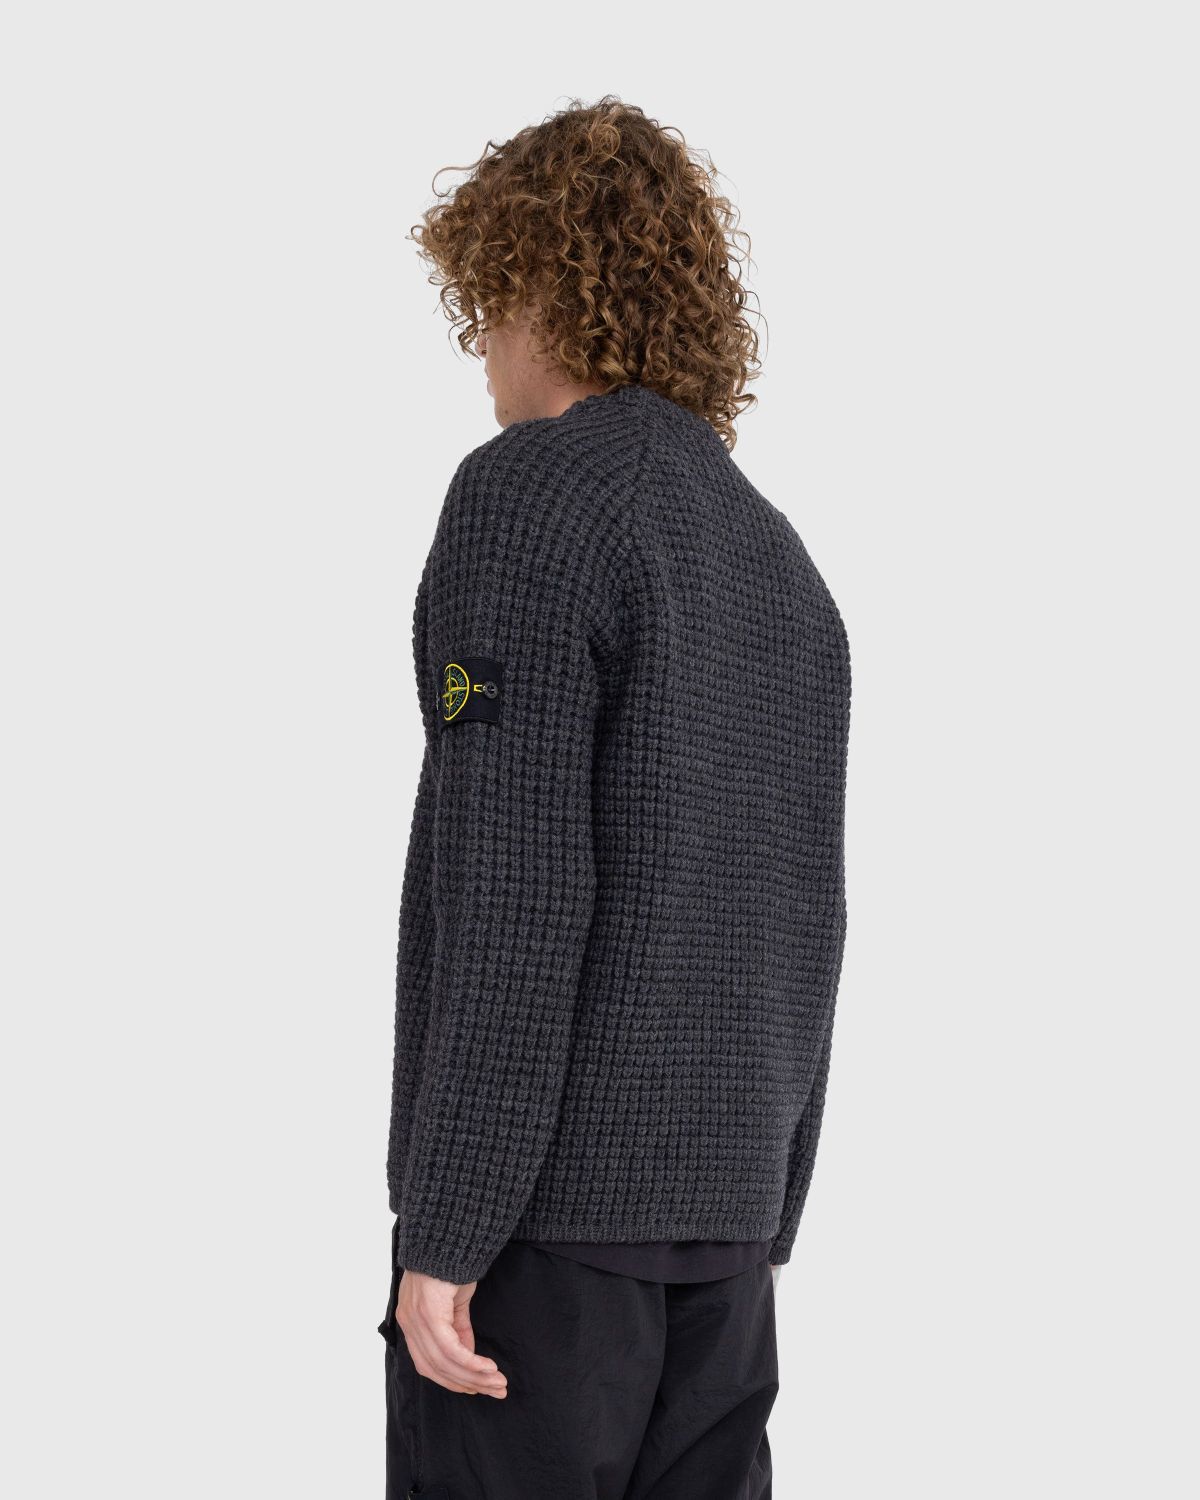 Stone Island – Waffle Knit Sweater Melange Charcoal - Knitwear - Grey - Image 3